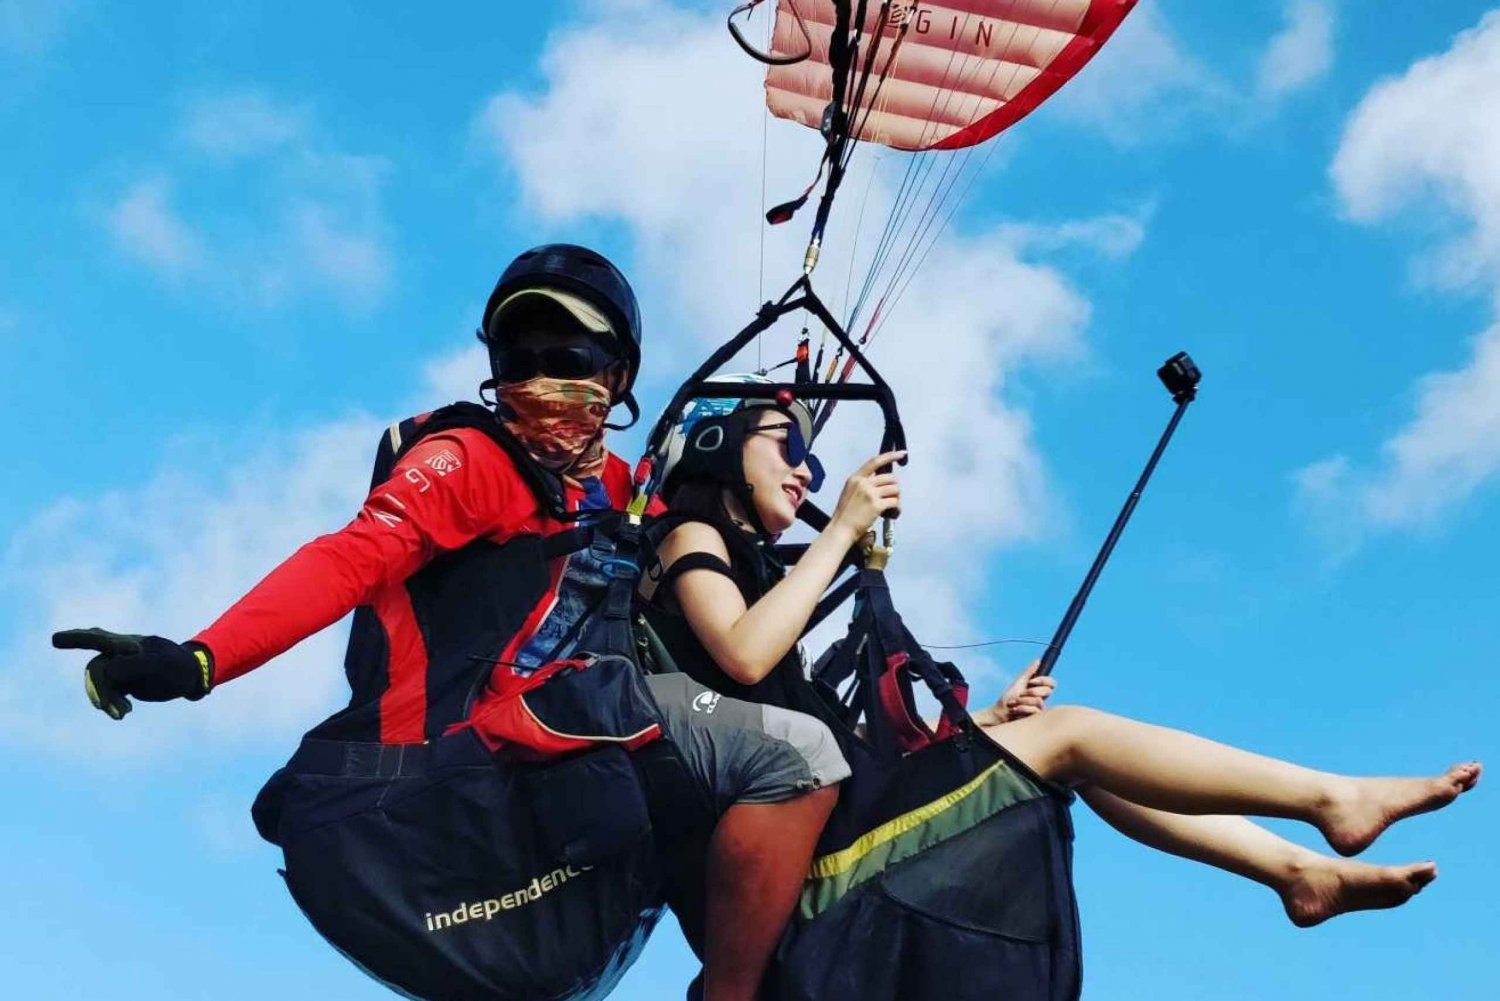 Paragliding Bali: Billetter til tandemflyging i Nusa Dua med video